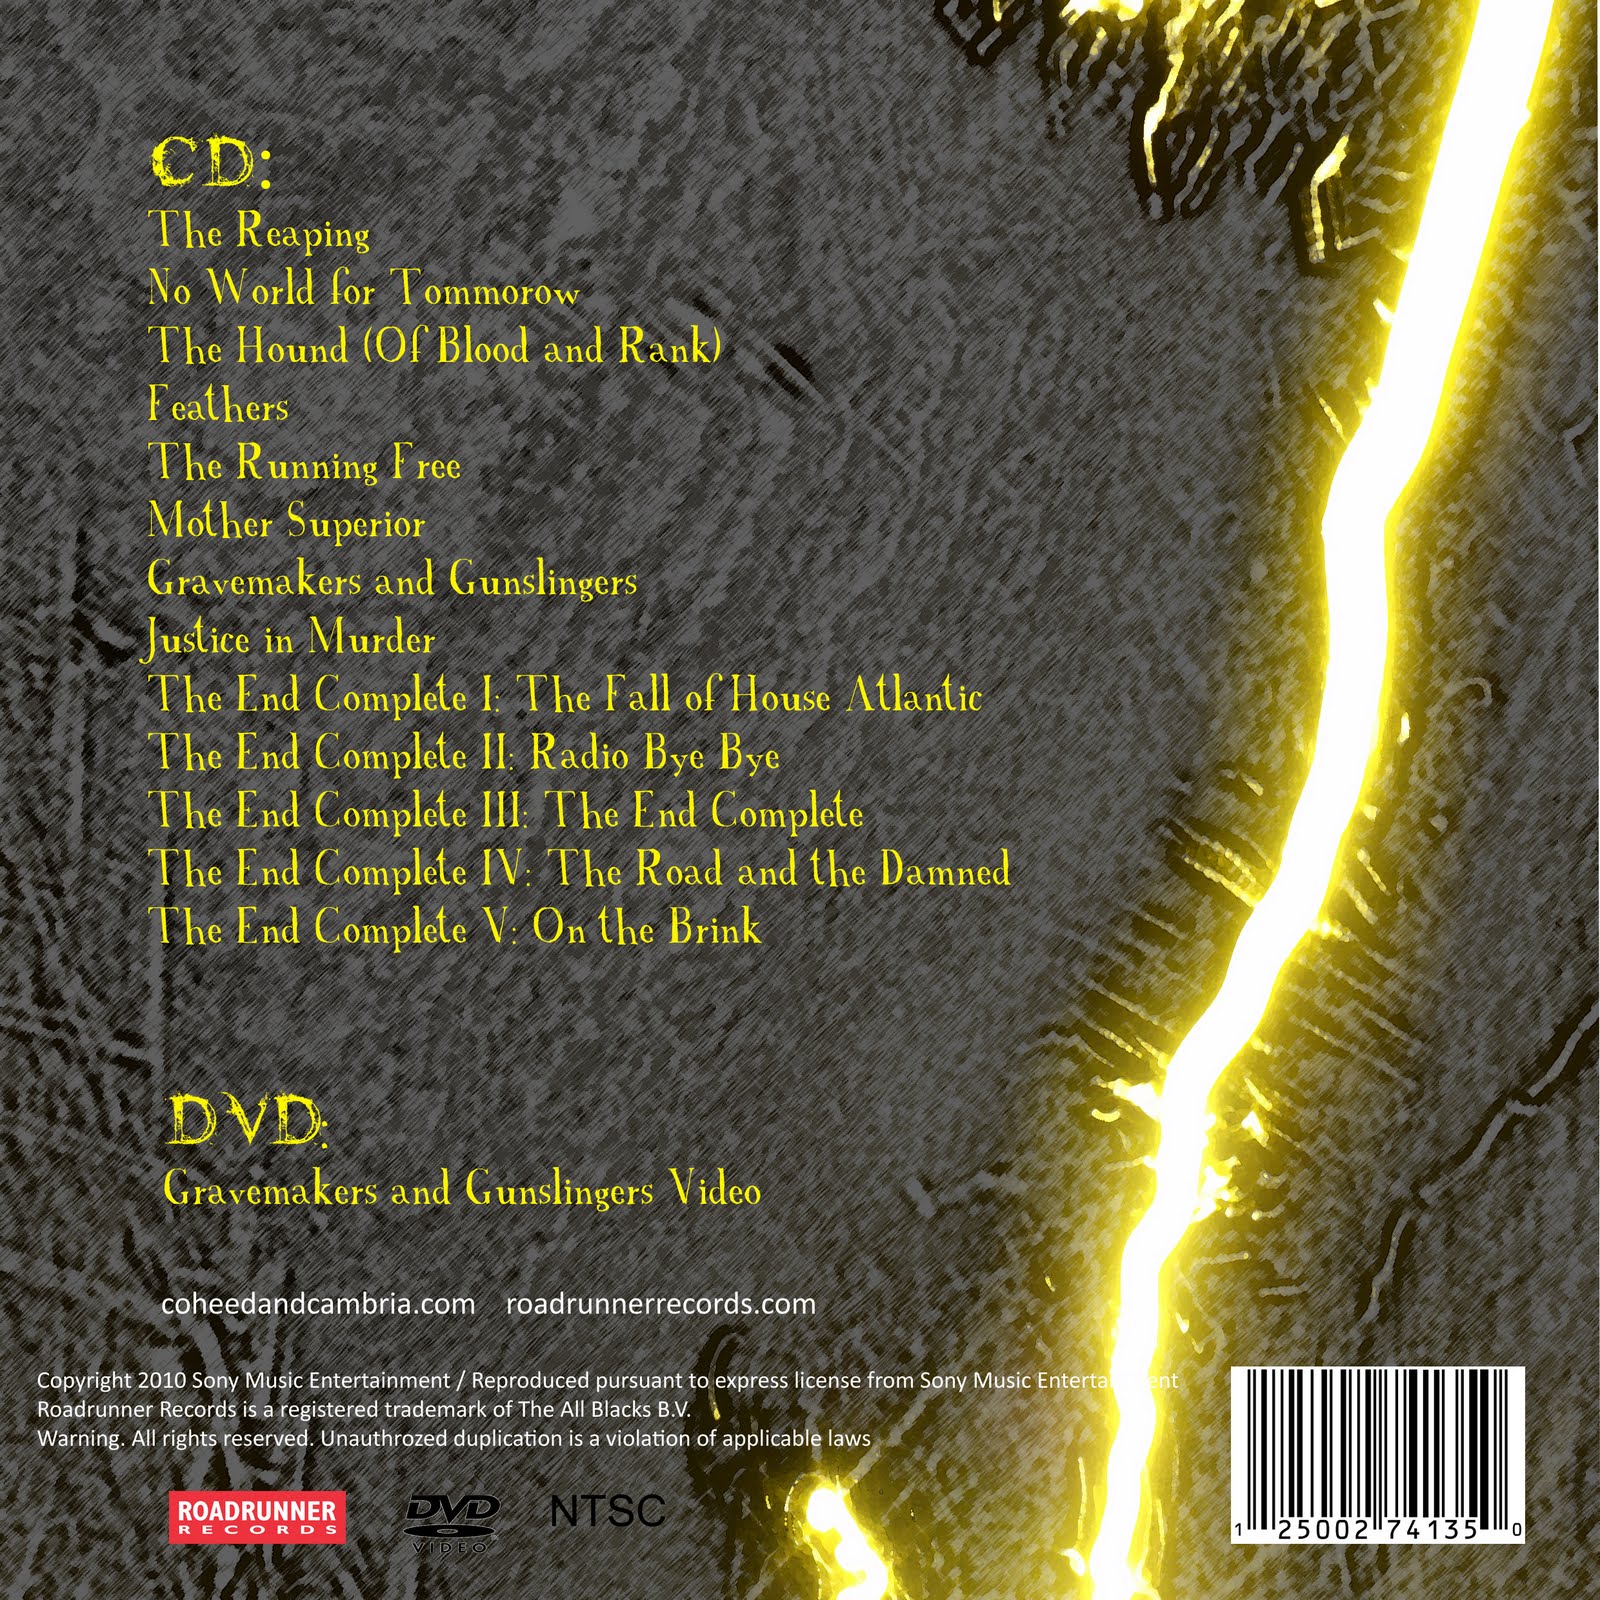 album cover back